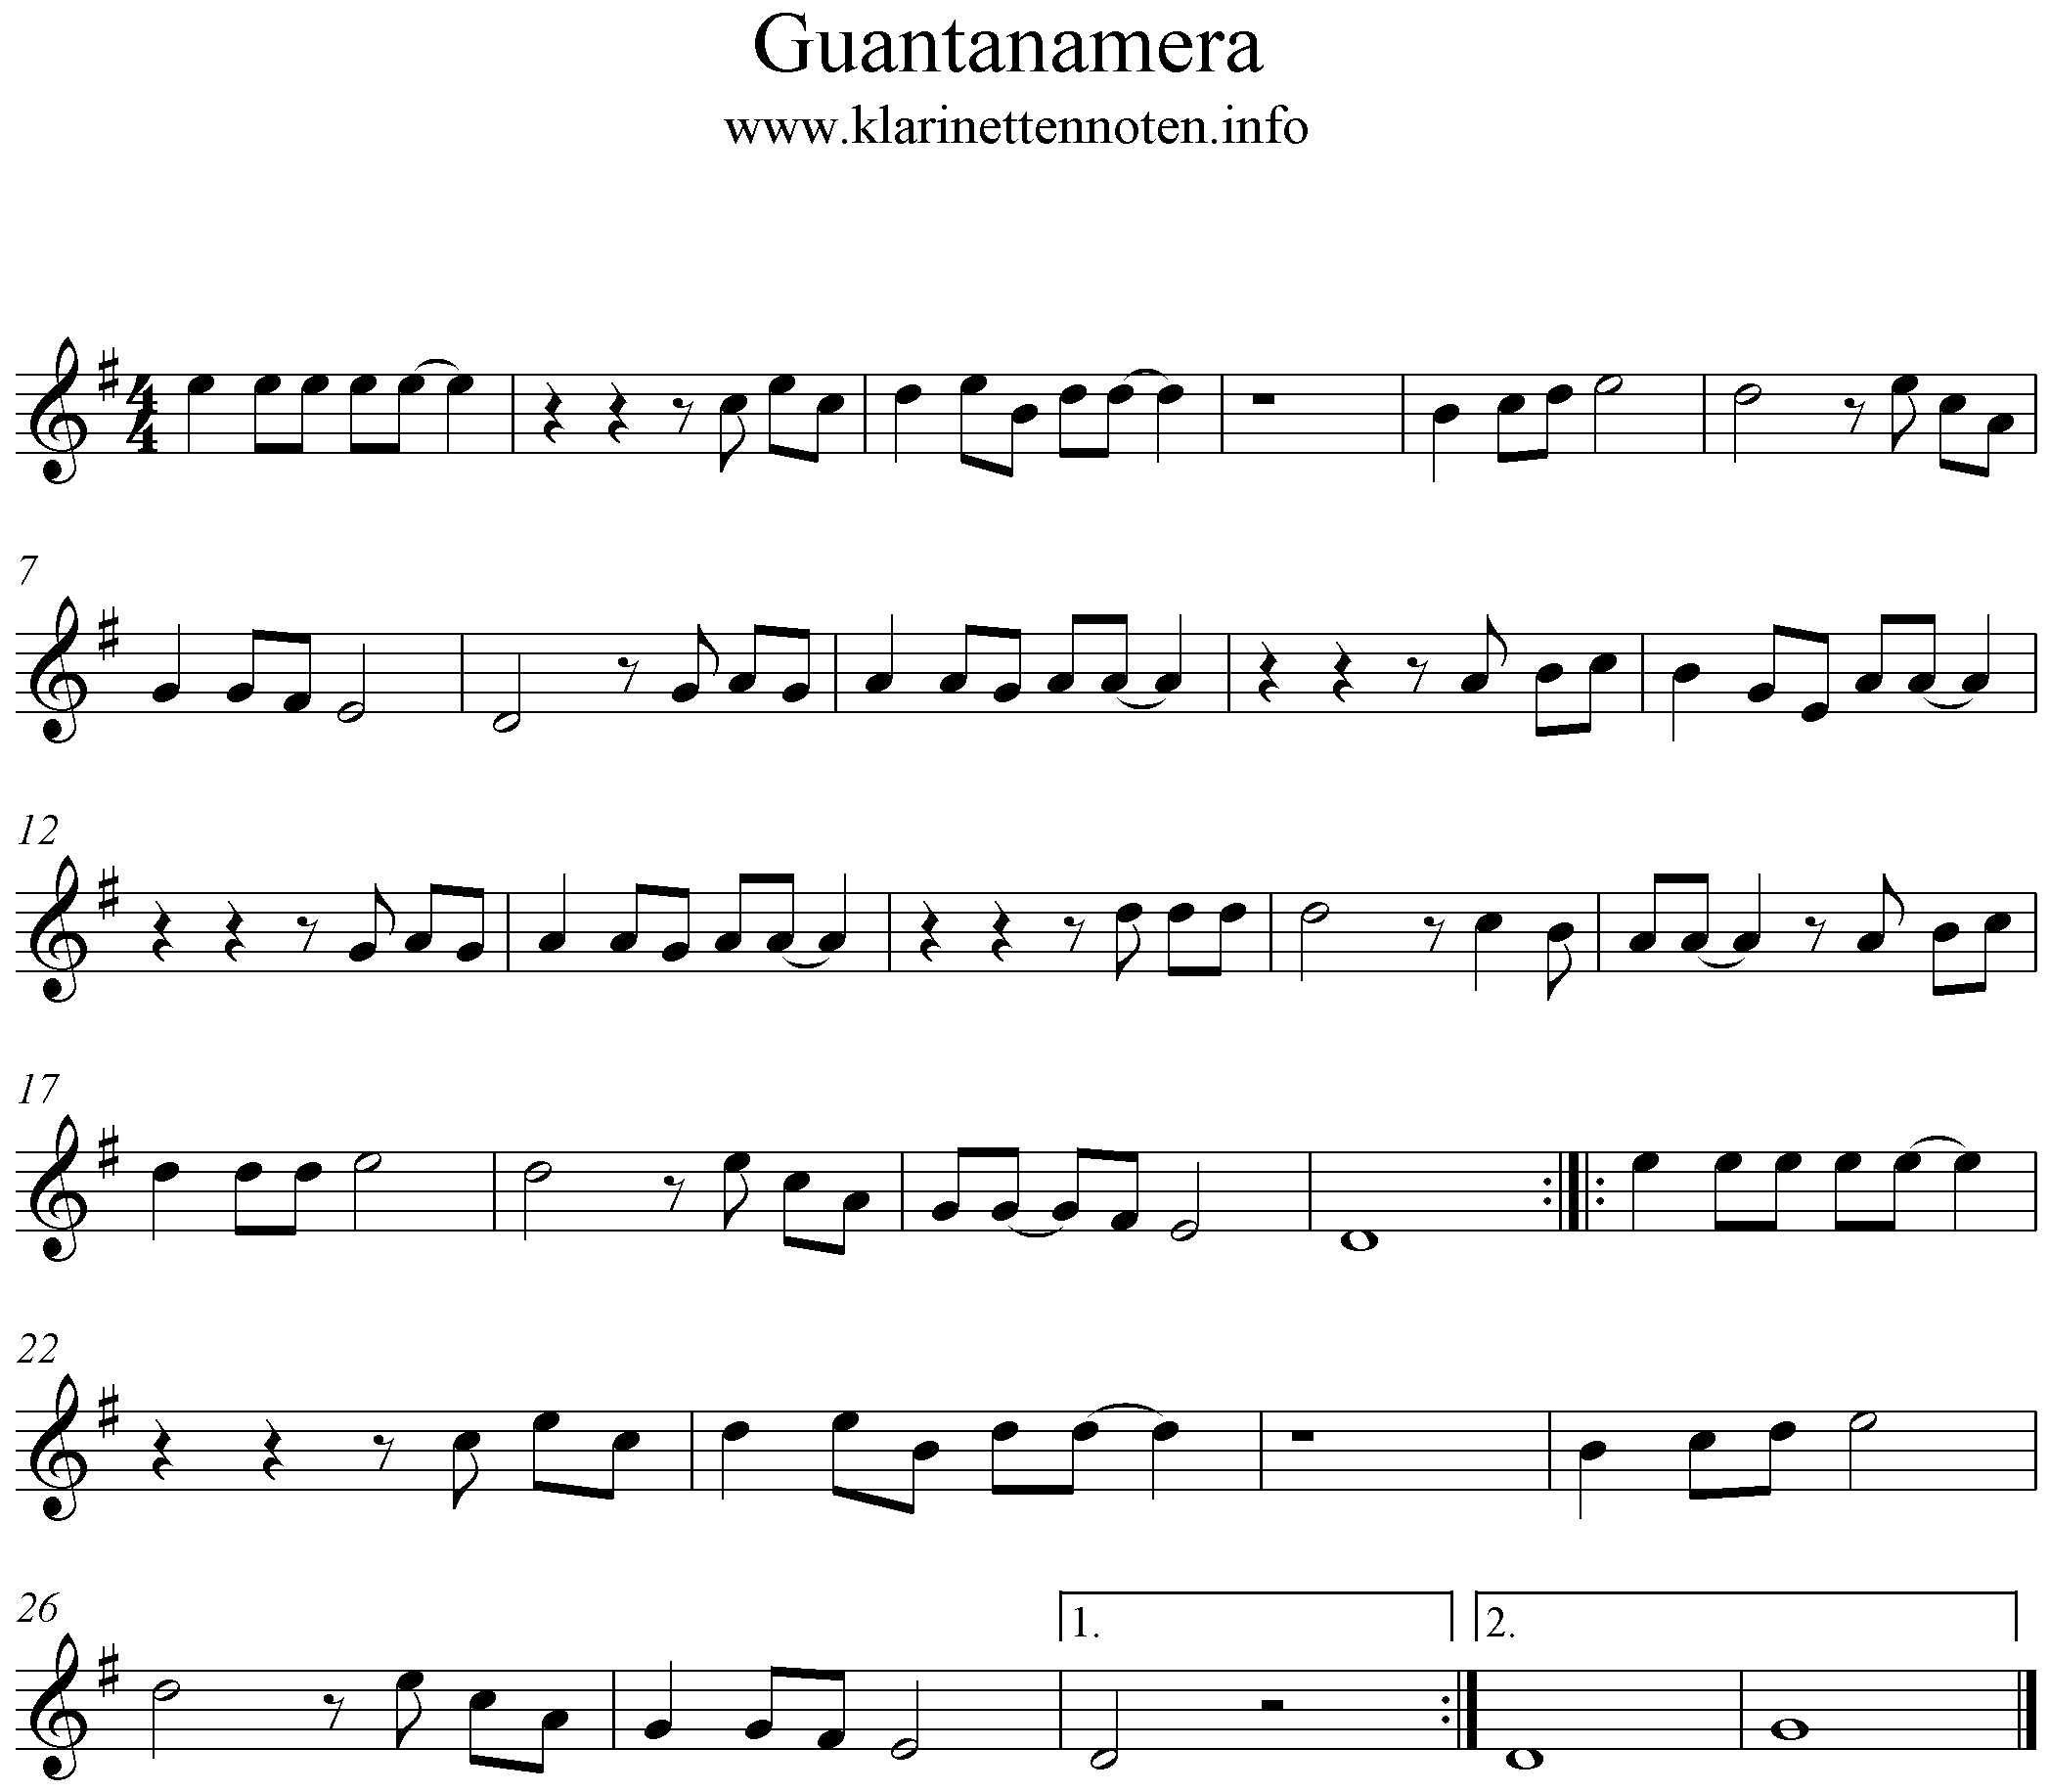 Guantanamera Noten für Klarinette, Clarinet, G-Major